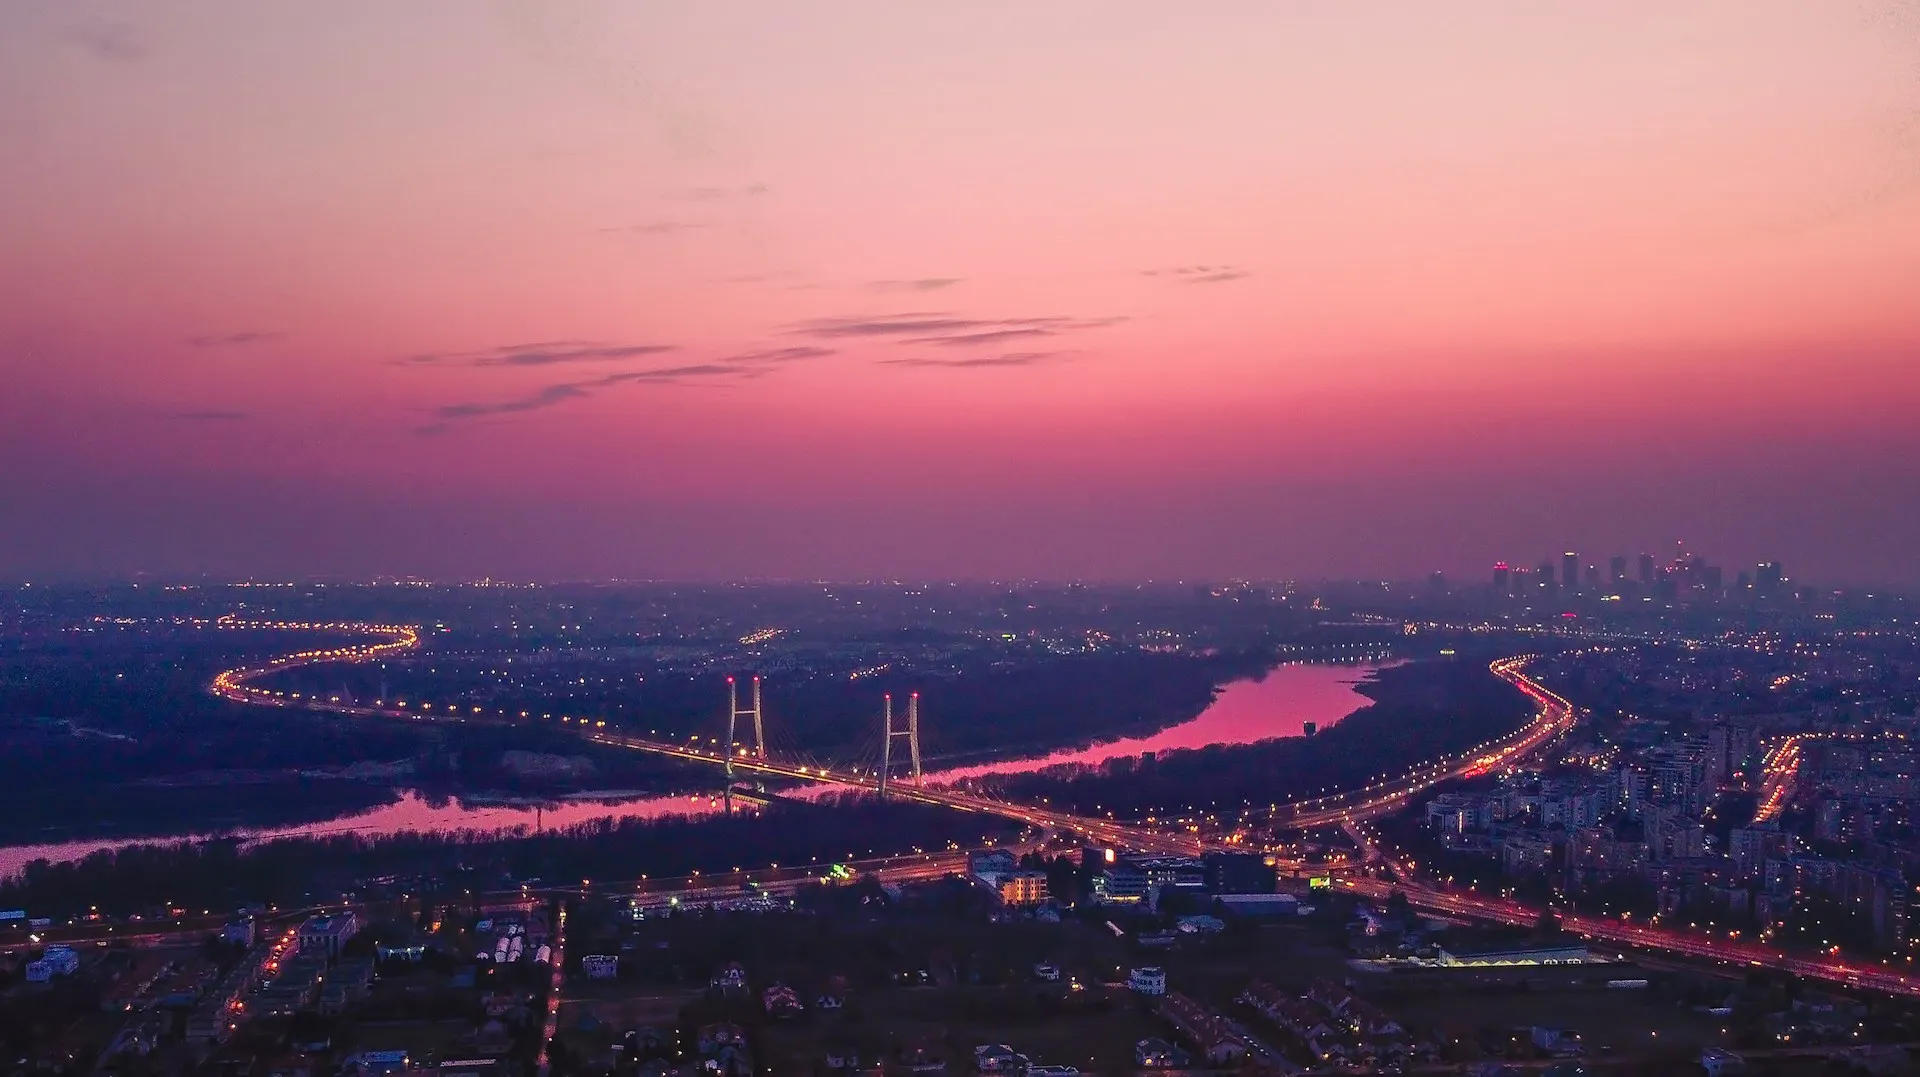 Aerial view of Warsaw. Source: Photo by Lukasz Niescioruk on Unsplash